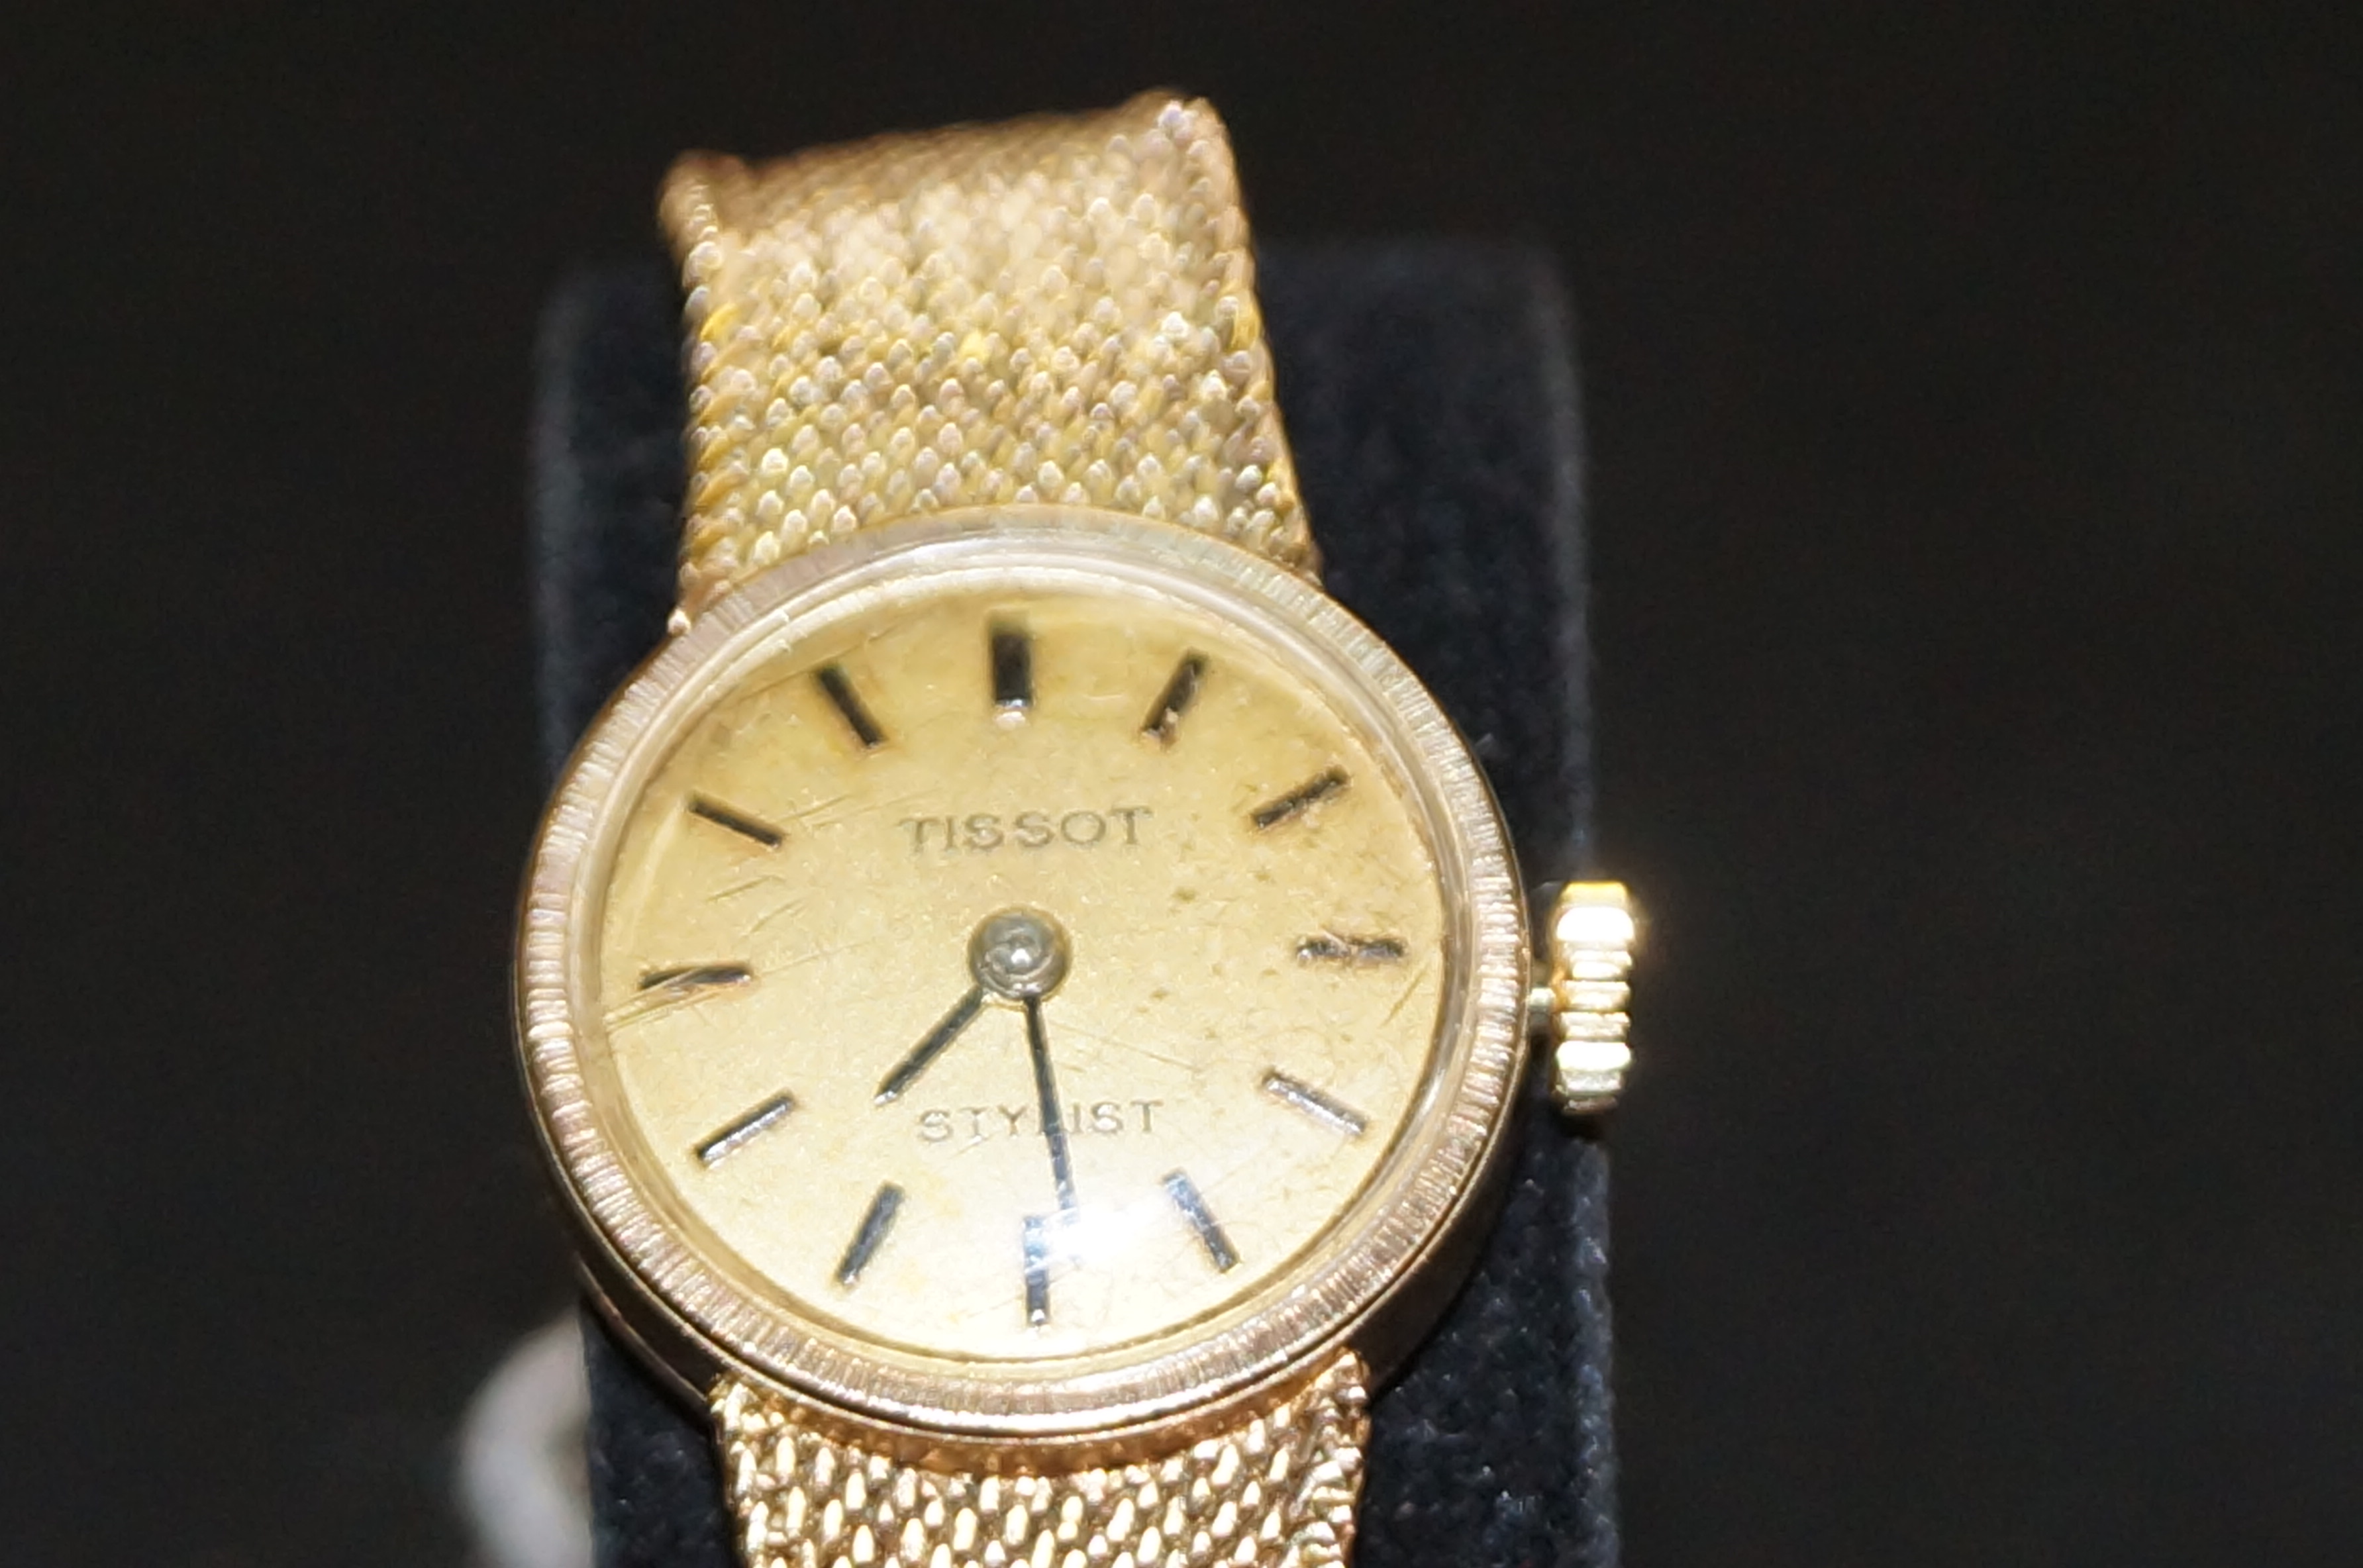 9ct gold strap/cased ladies Tissot Stylist wristwa